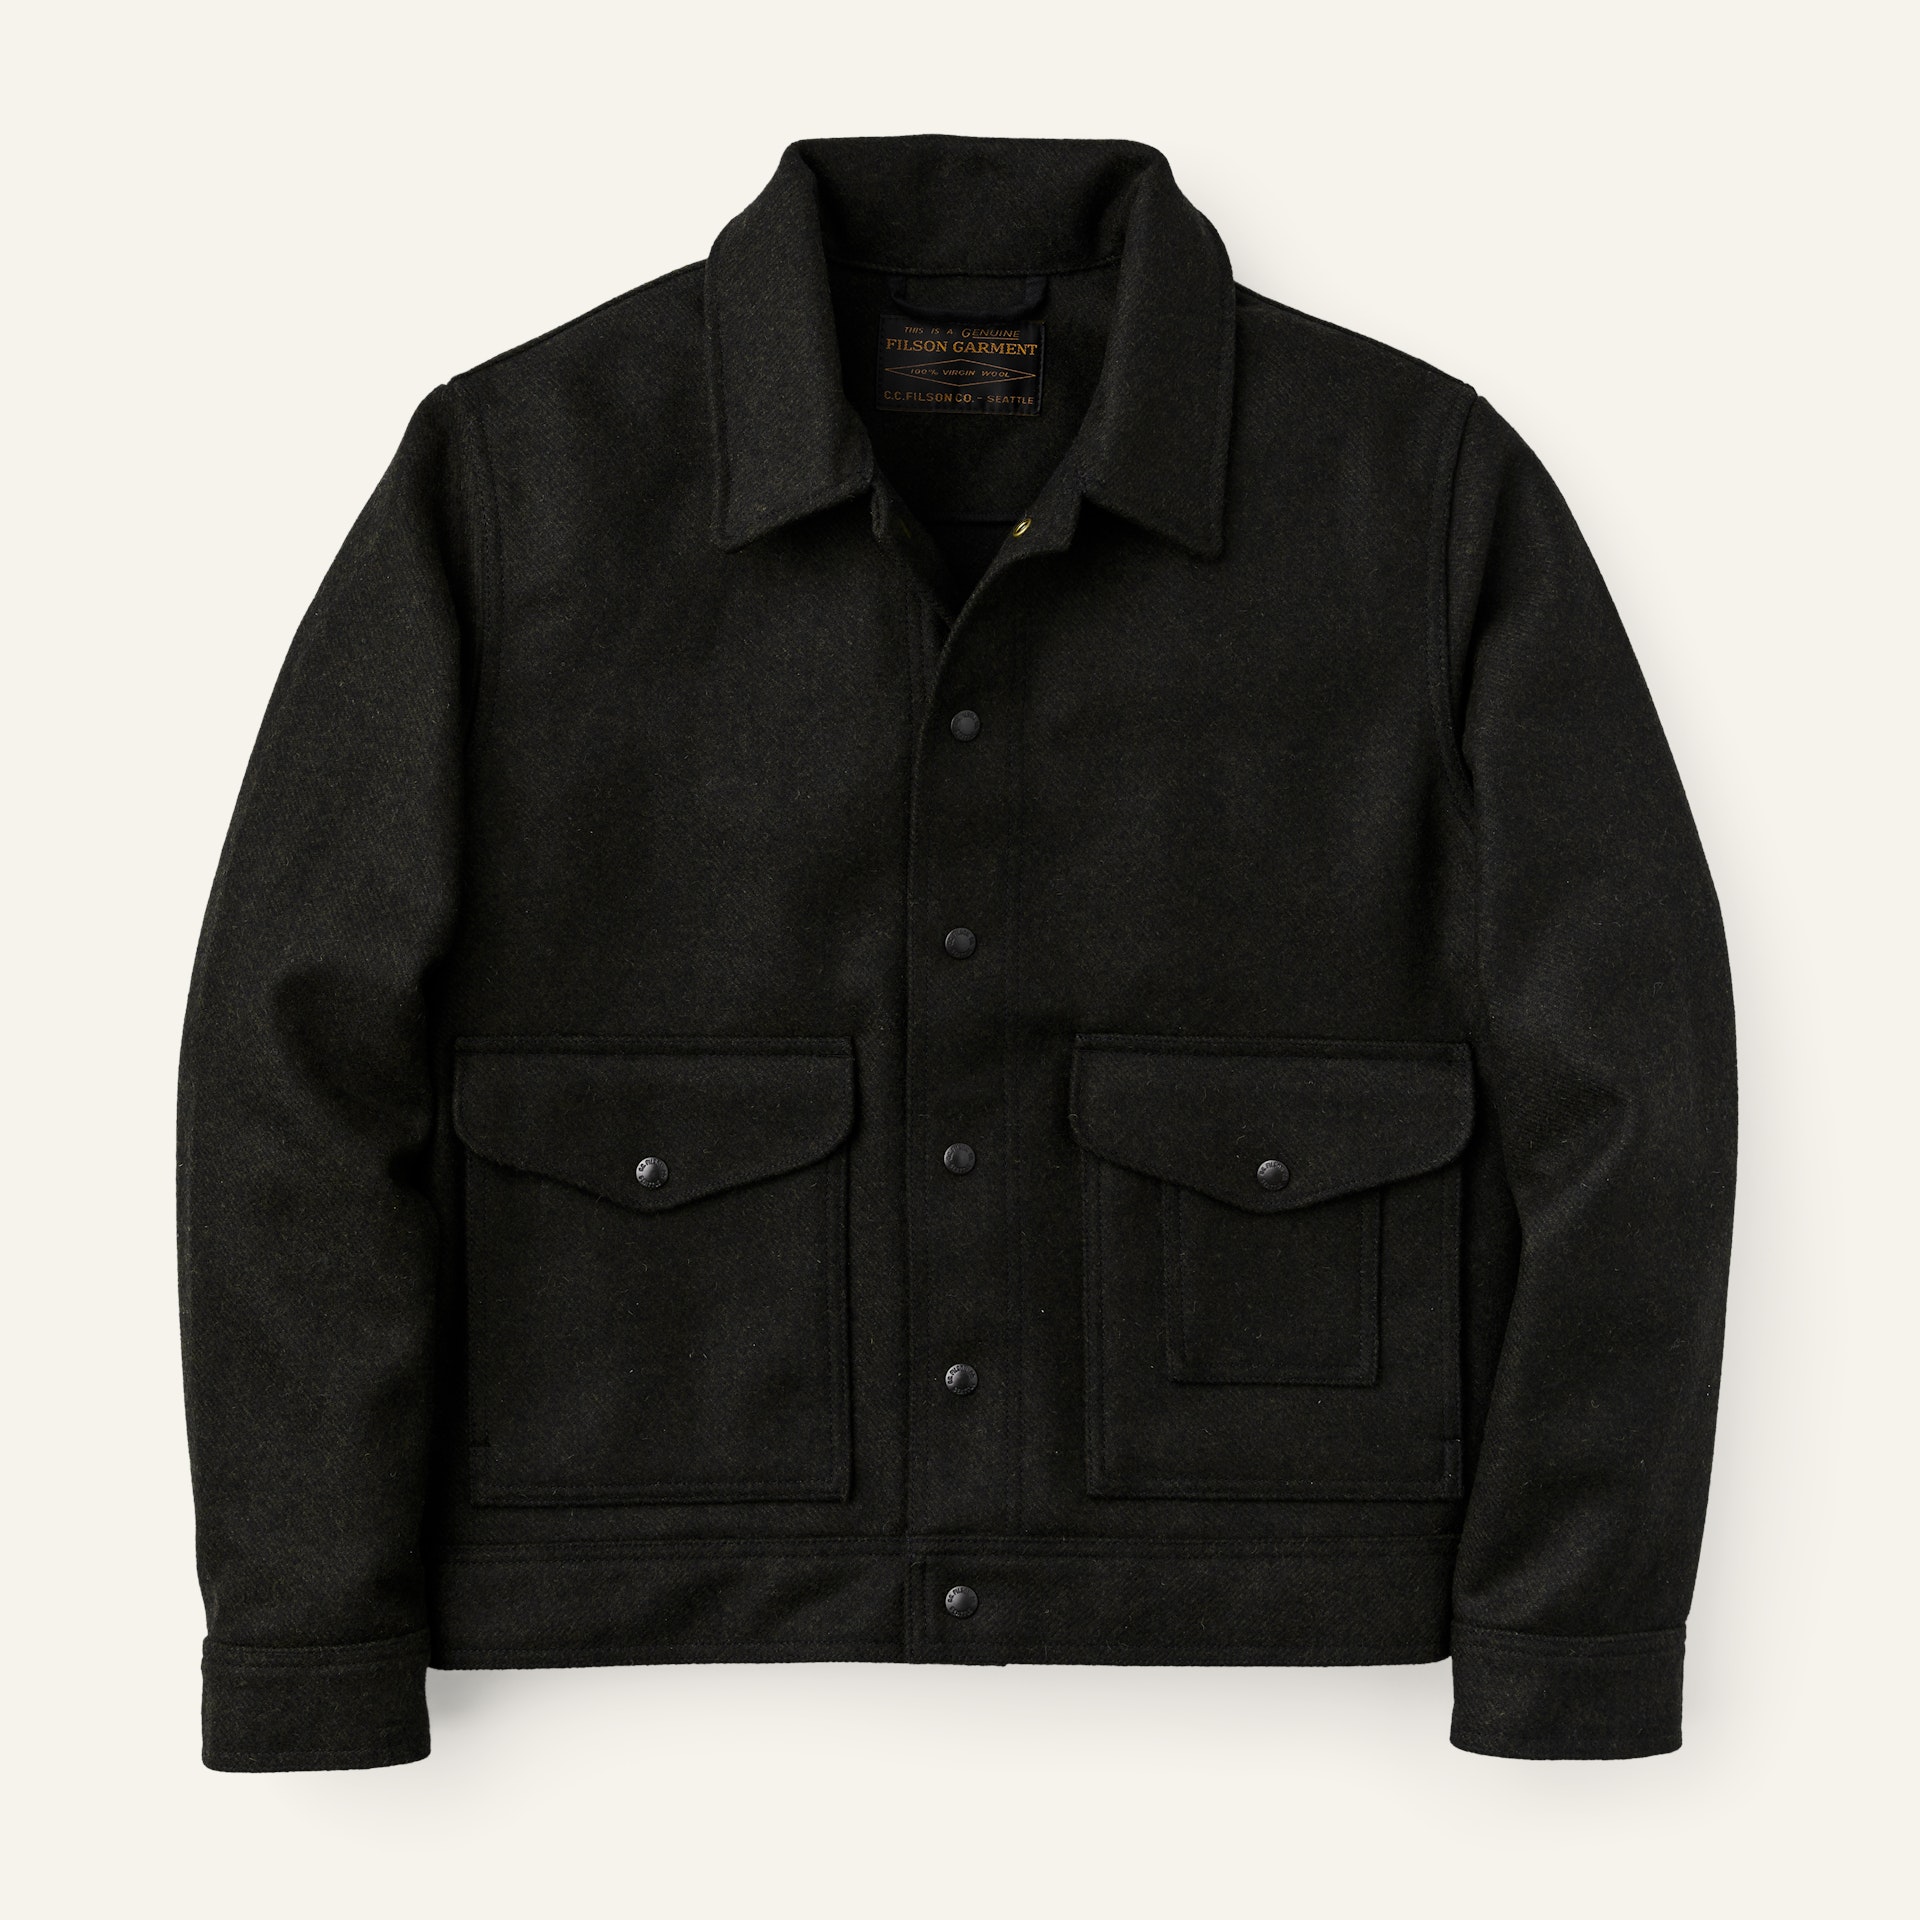 1930s Men’s Coat and Jacket Styles Mackinaw Wool Work Jacket $455.00 AT vintagedancer.com